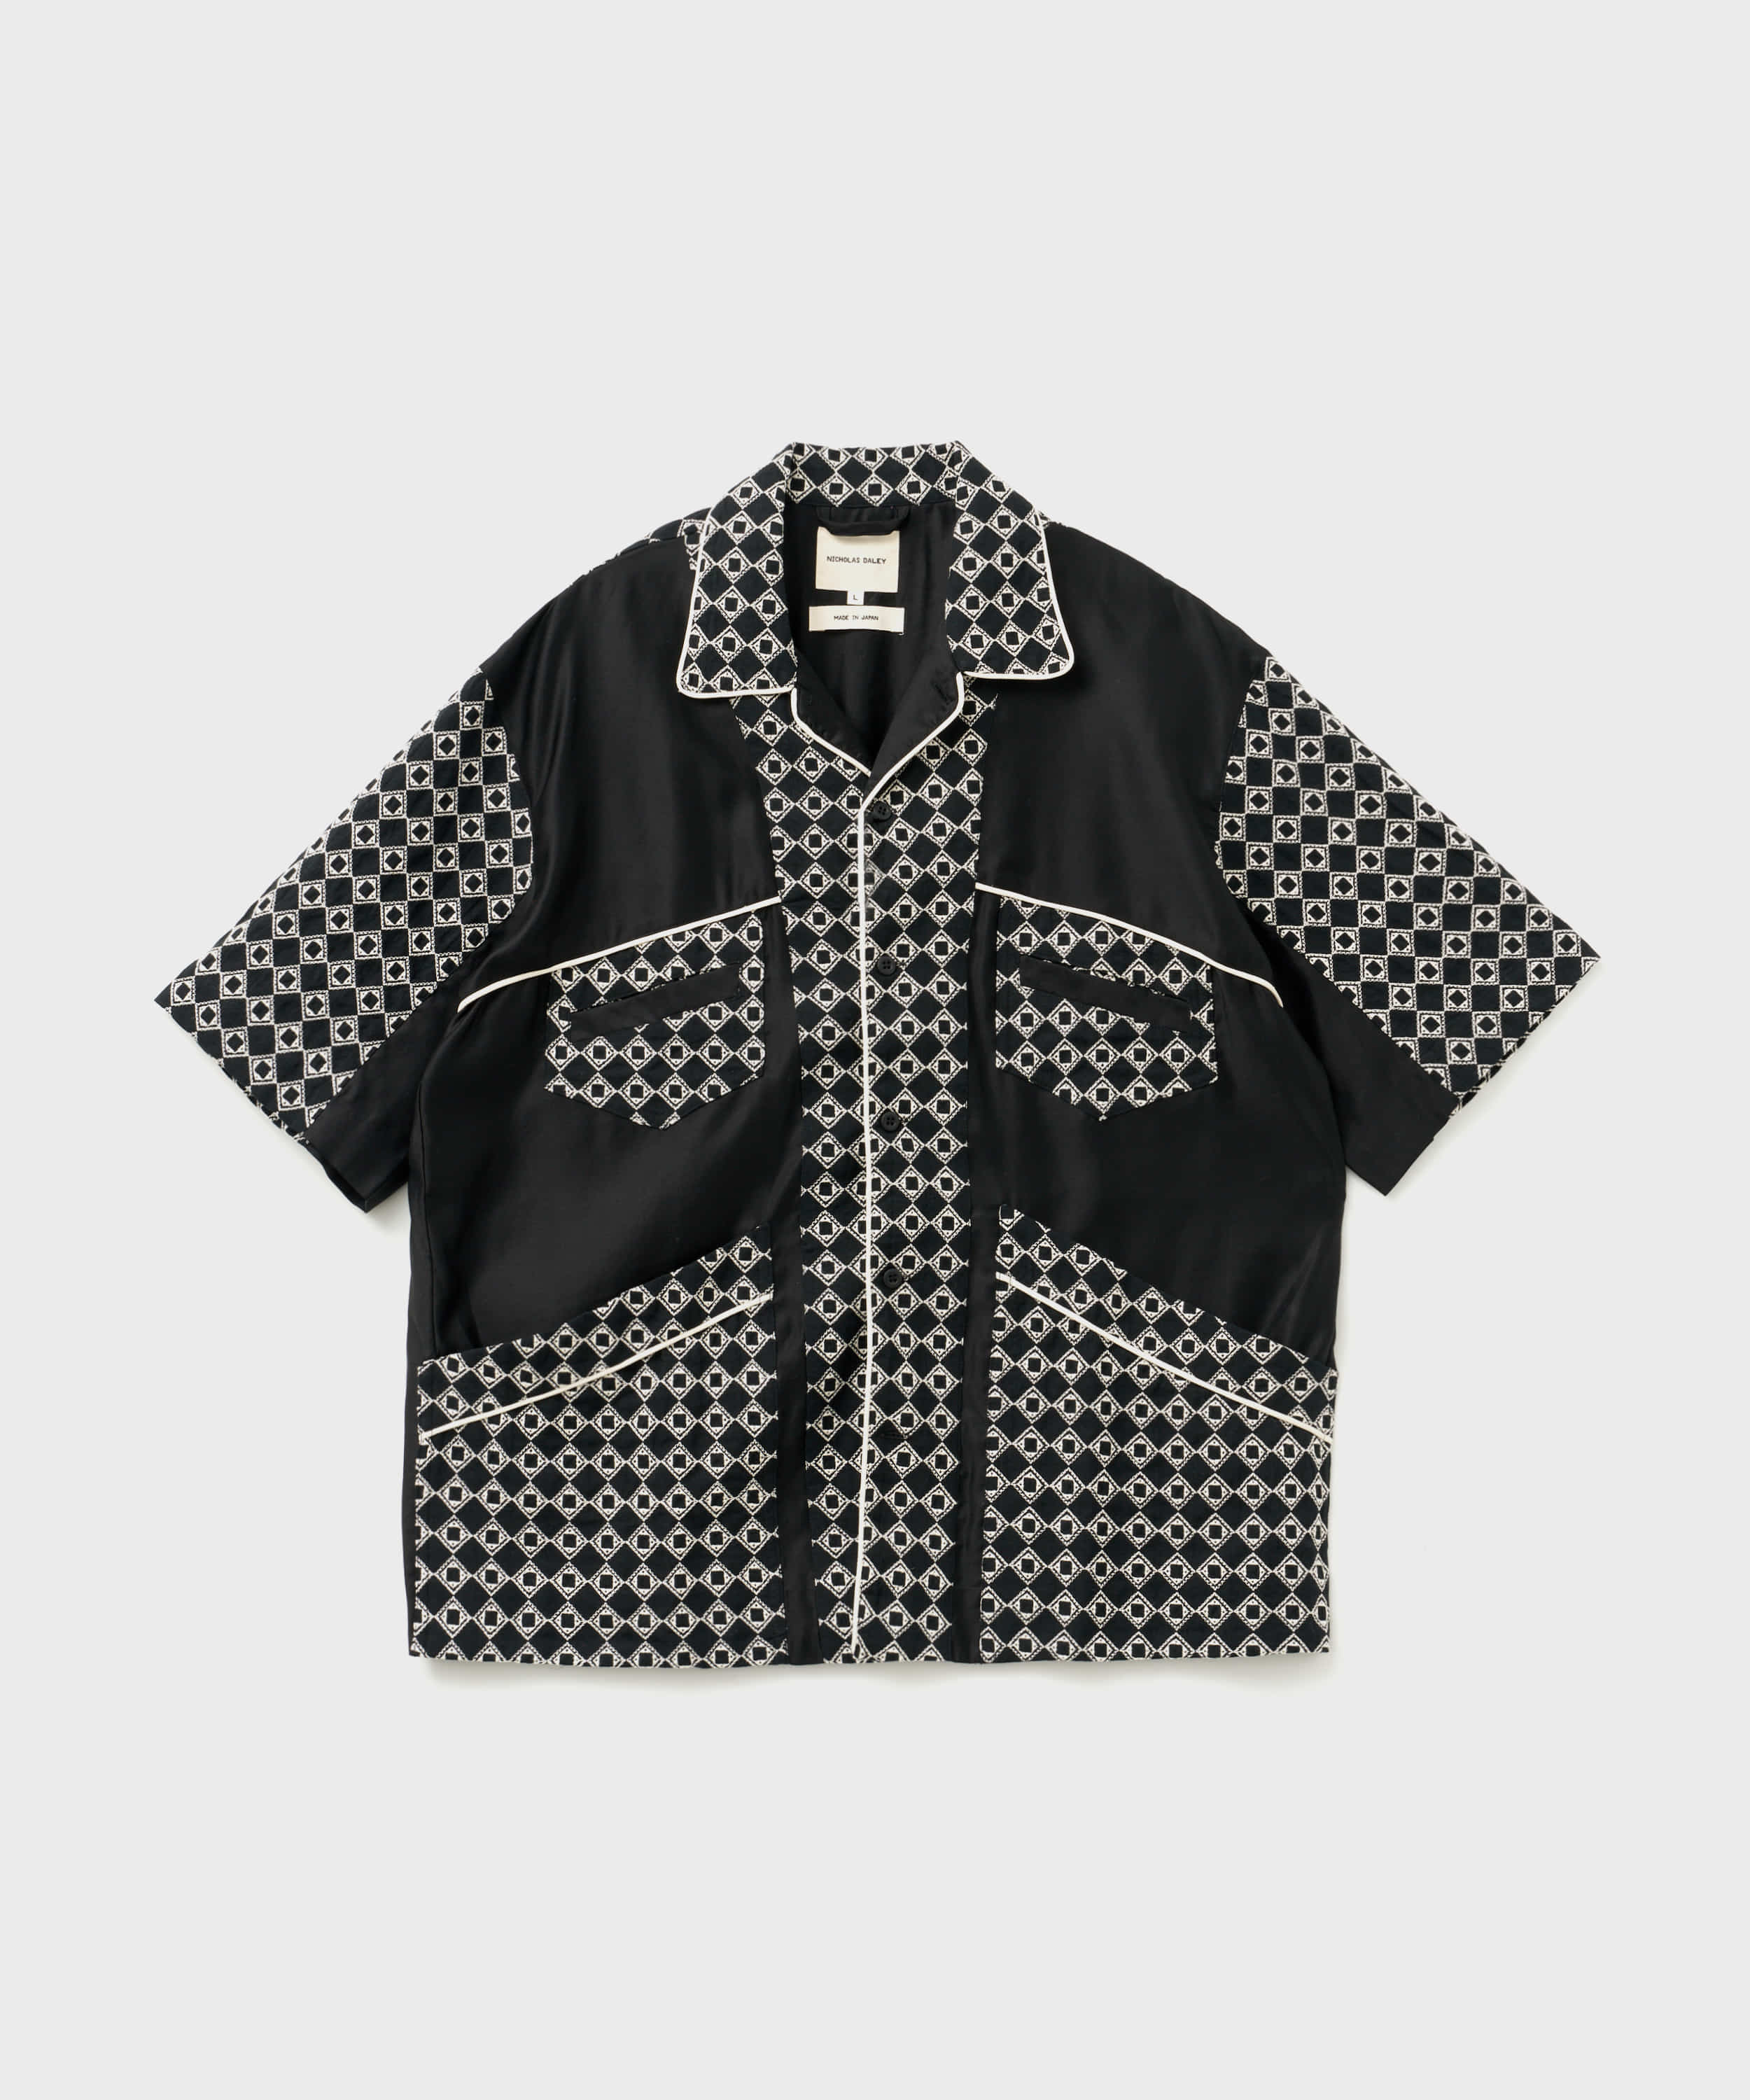 Mento Shirt (Black Embroidery)